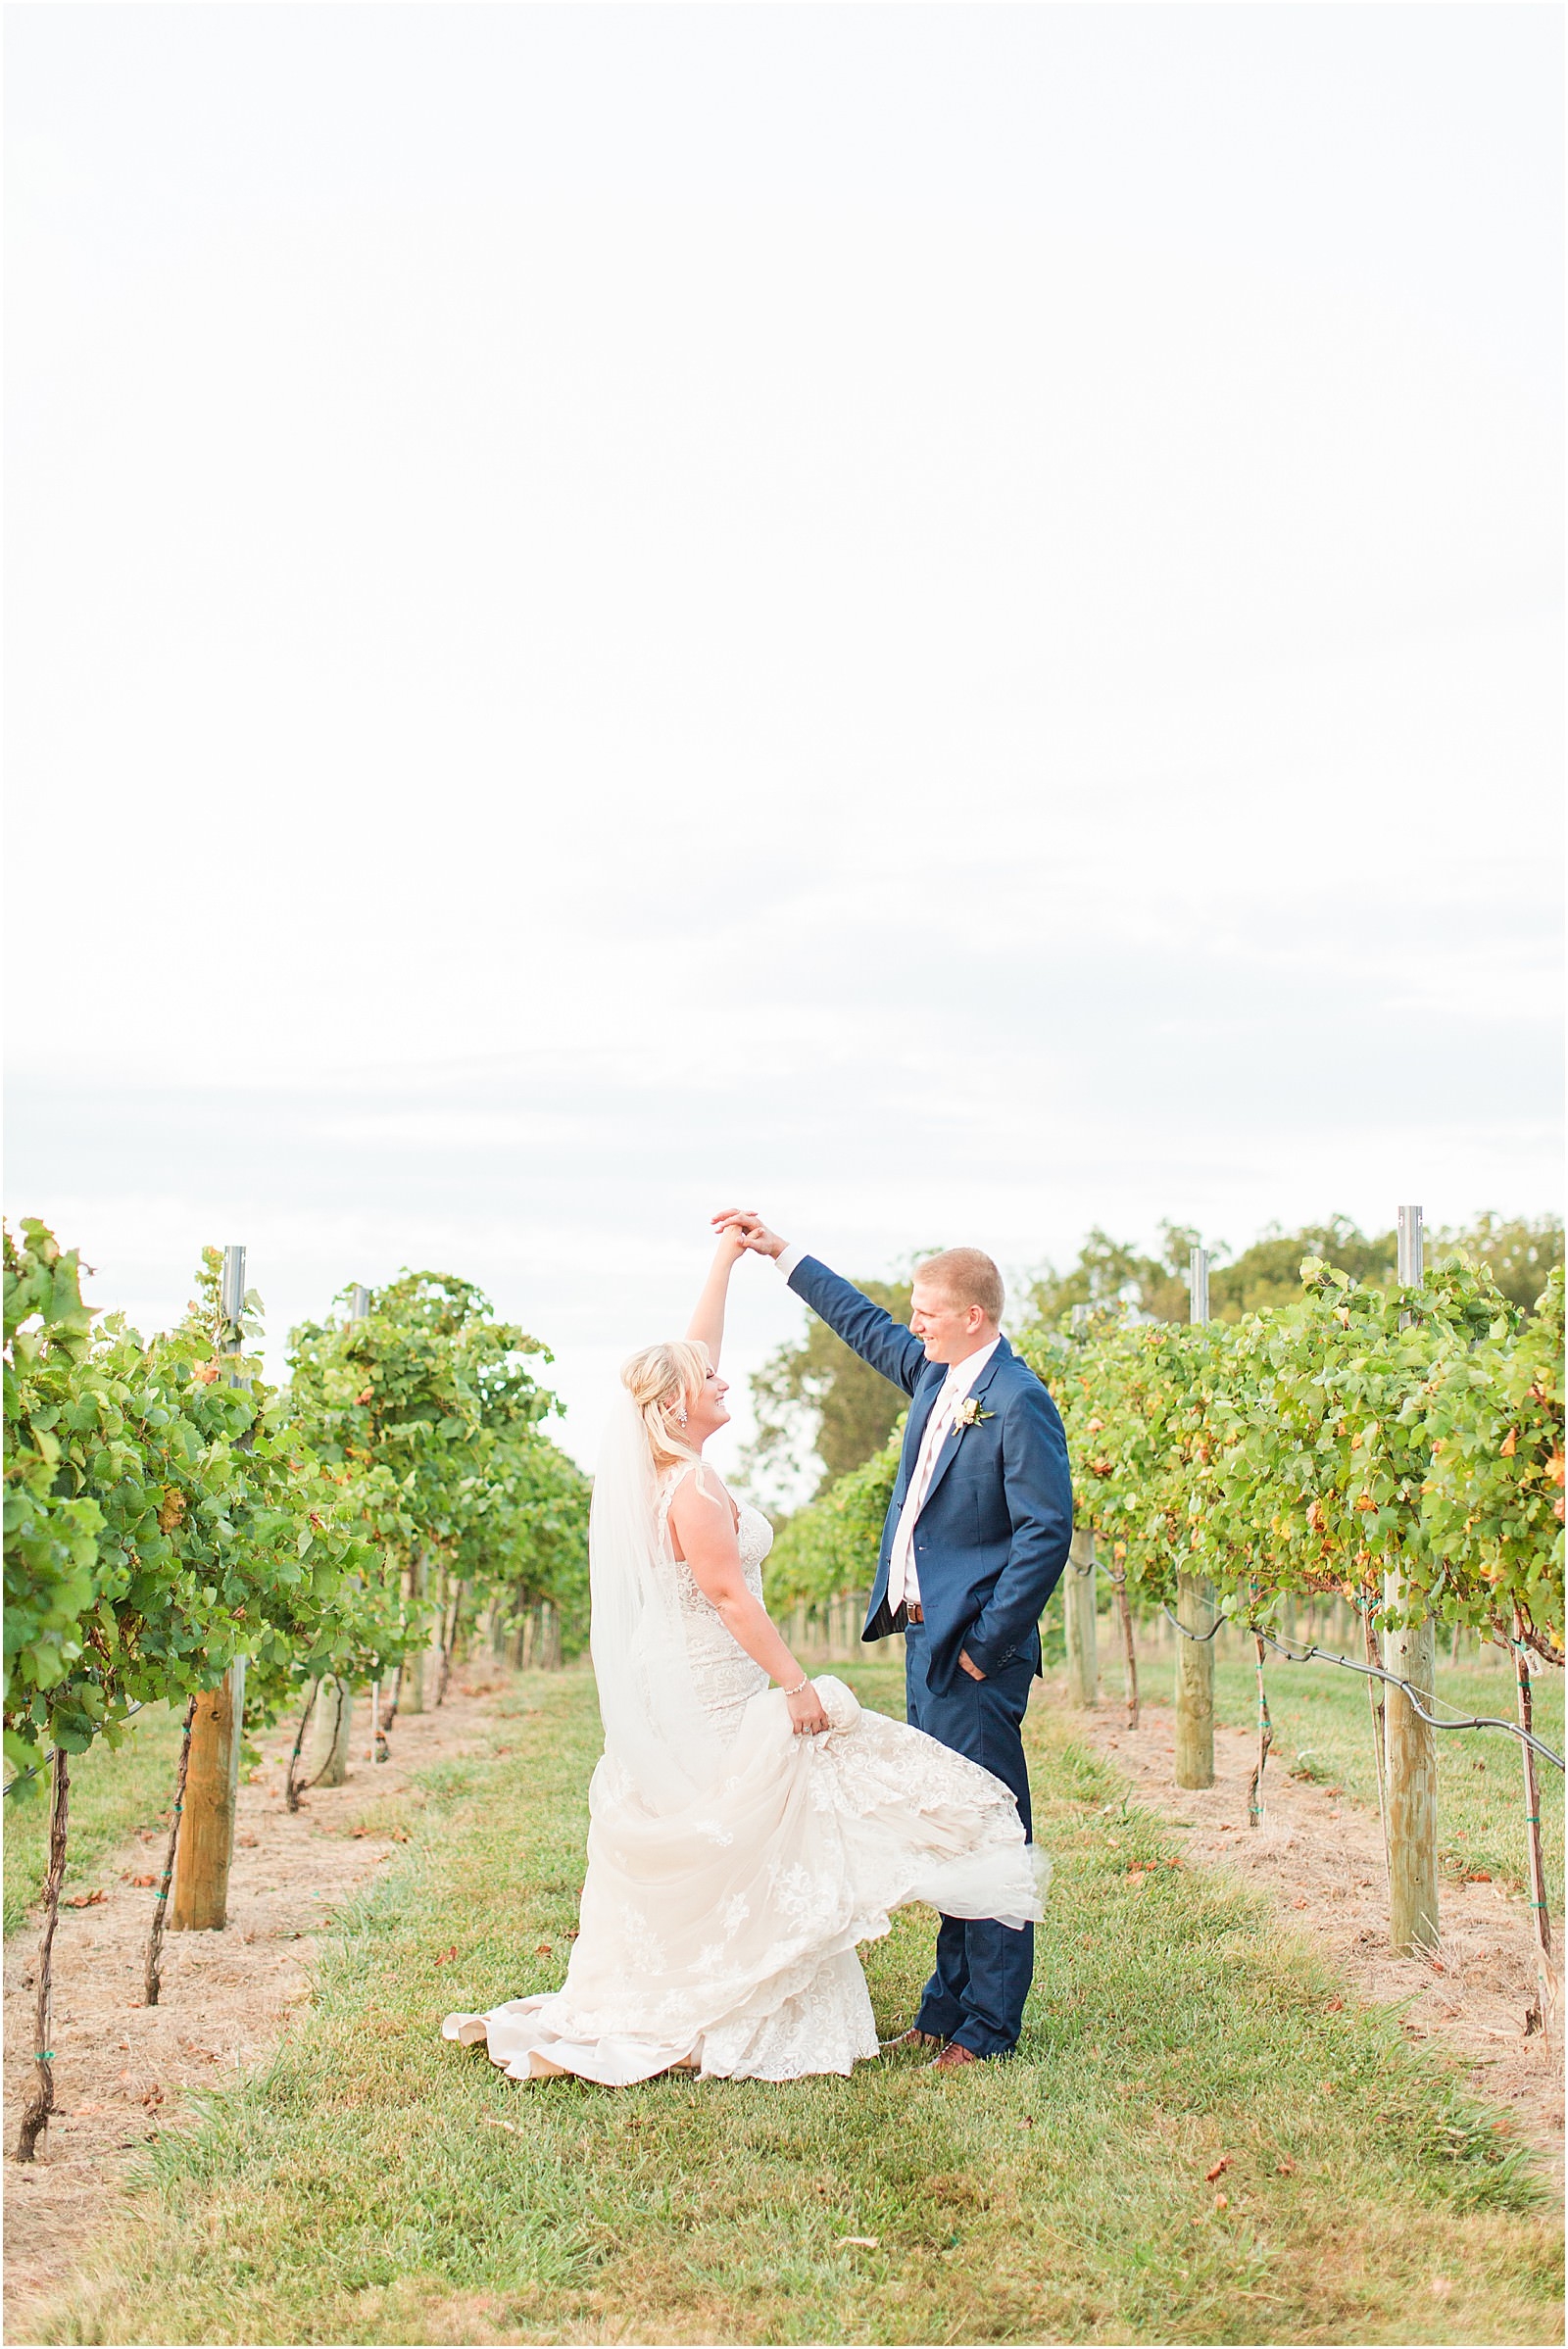 Kelsey and Caleb | Walkers Bluff Winery Wedding | Bret and Brandie Photography107.jpg